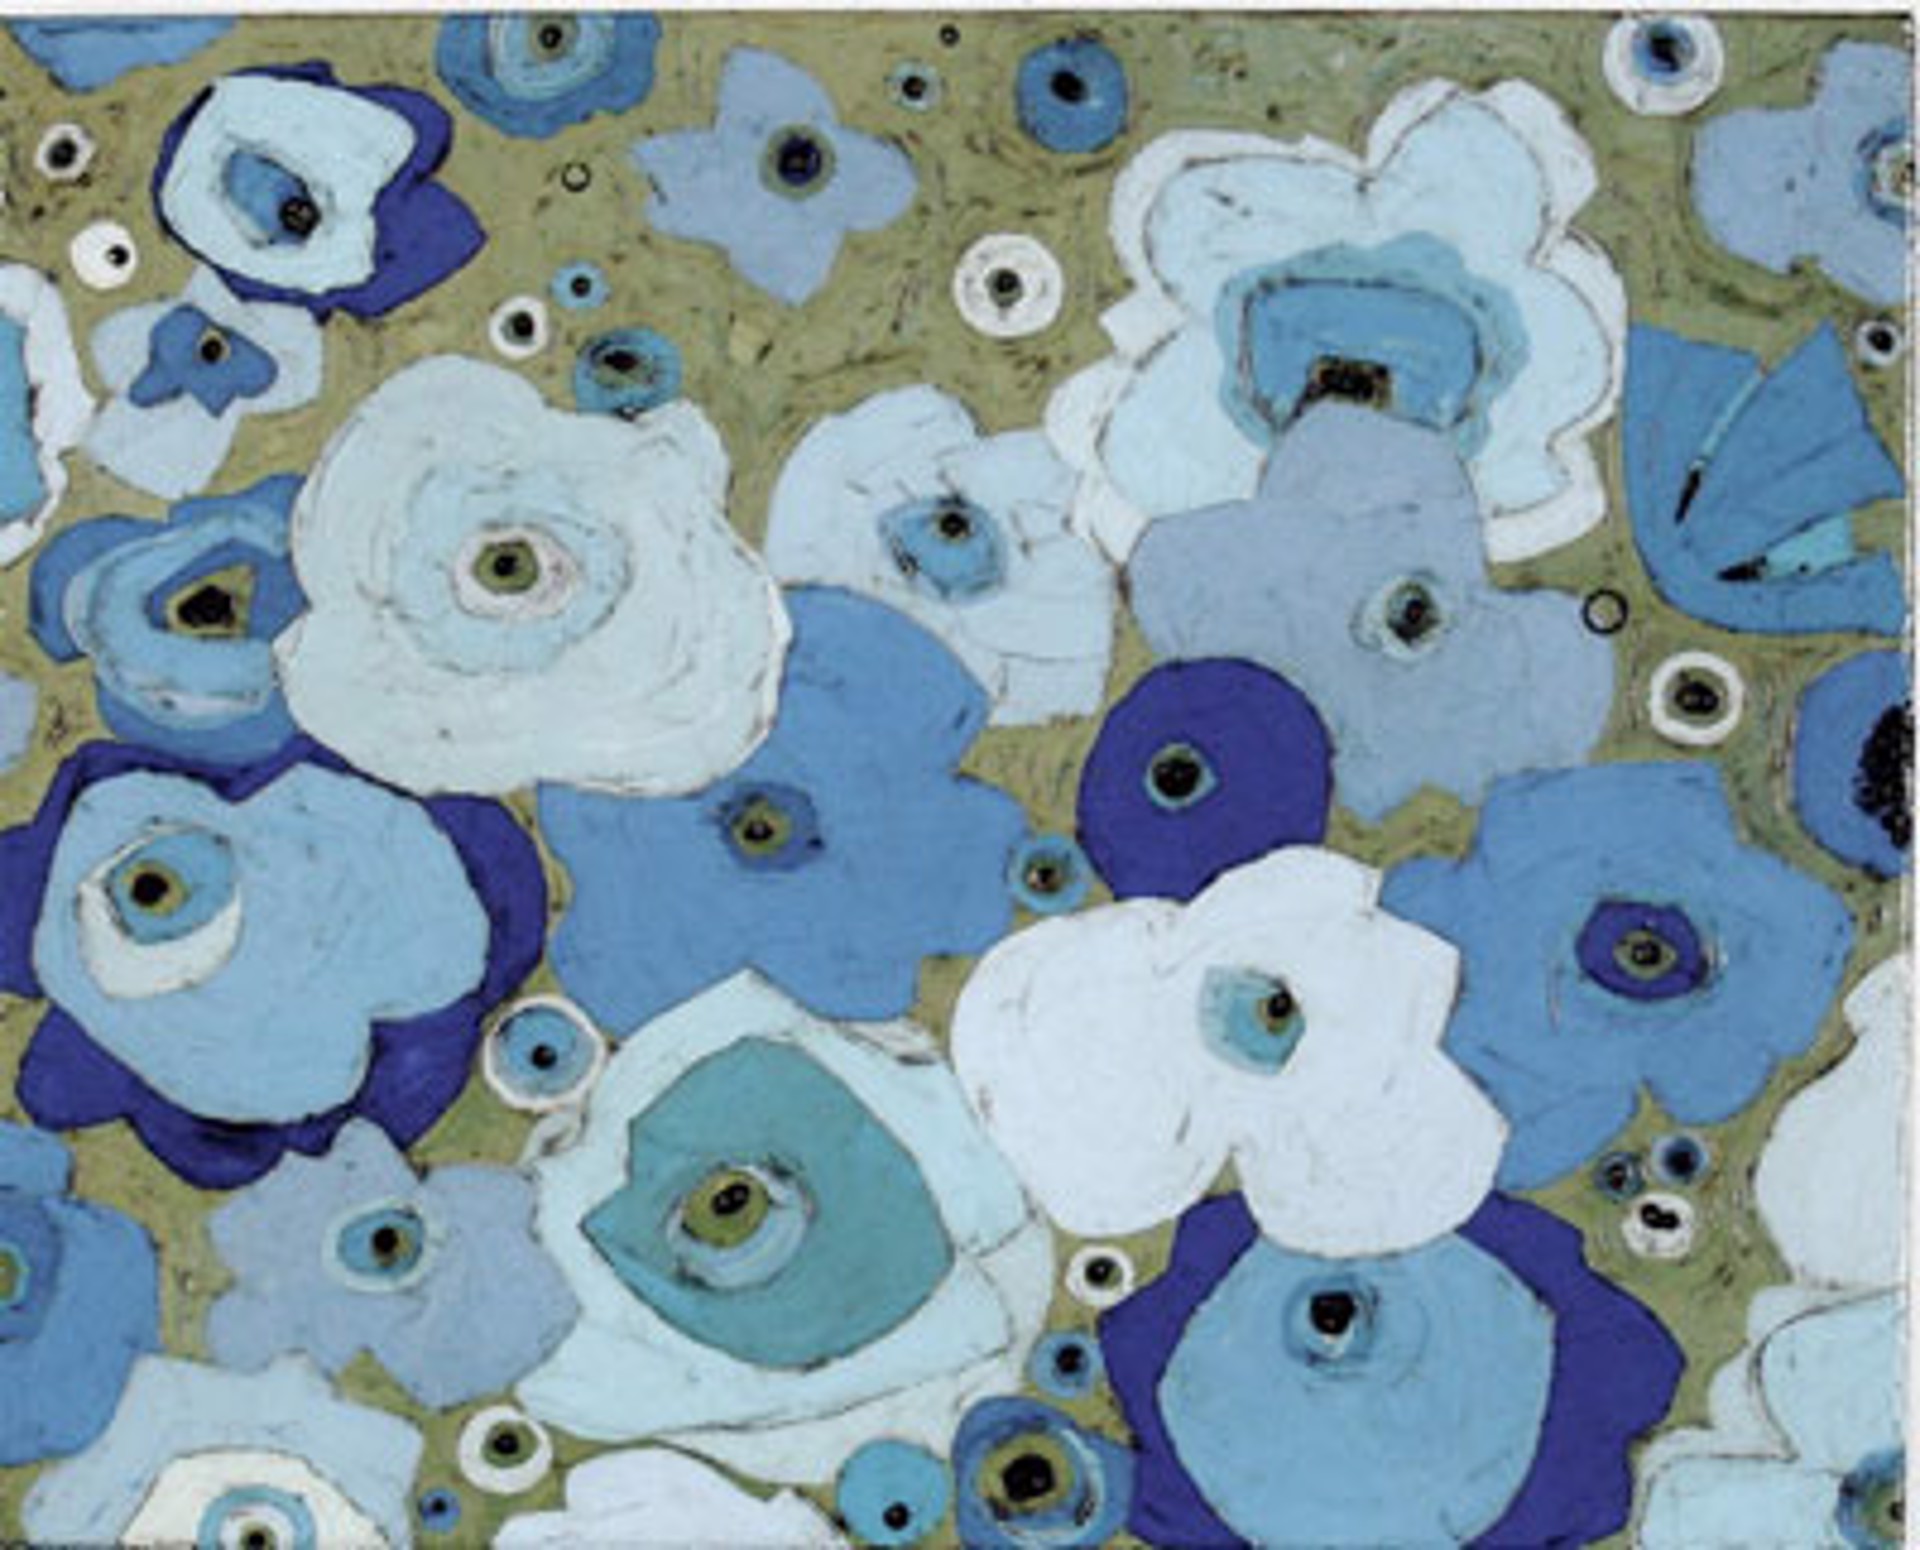 Blue Poppies for You by Karen Tusinski